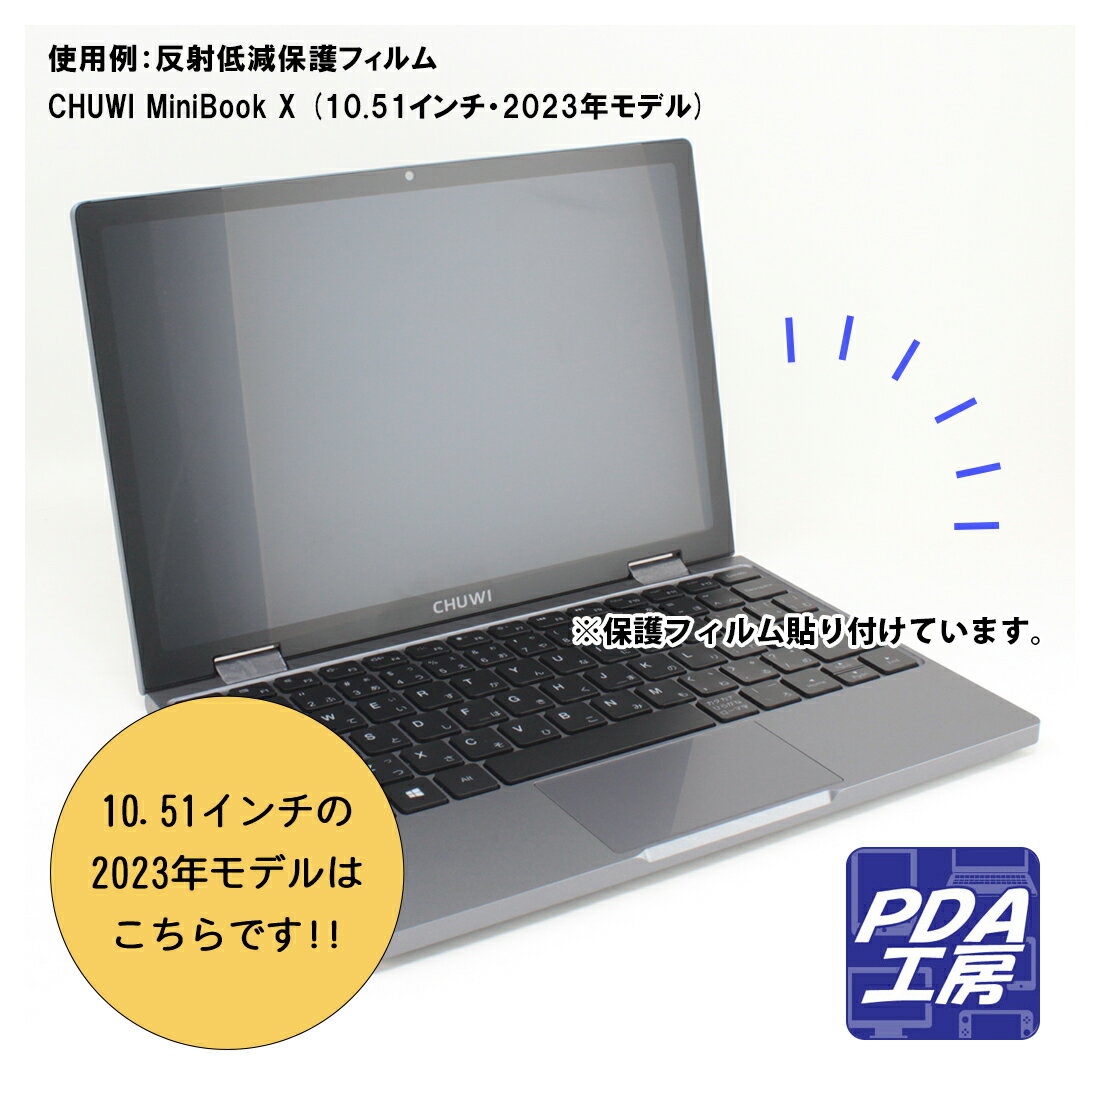 PDA工房 CHUWI MiniBook X (10.51インチ・2023年モデル)対応 PerfectShield Plus 保護 フィルム 反射低減 防指紋 日本製 自社製造直販 3